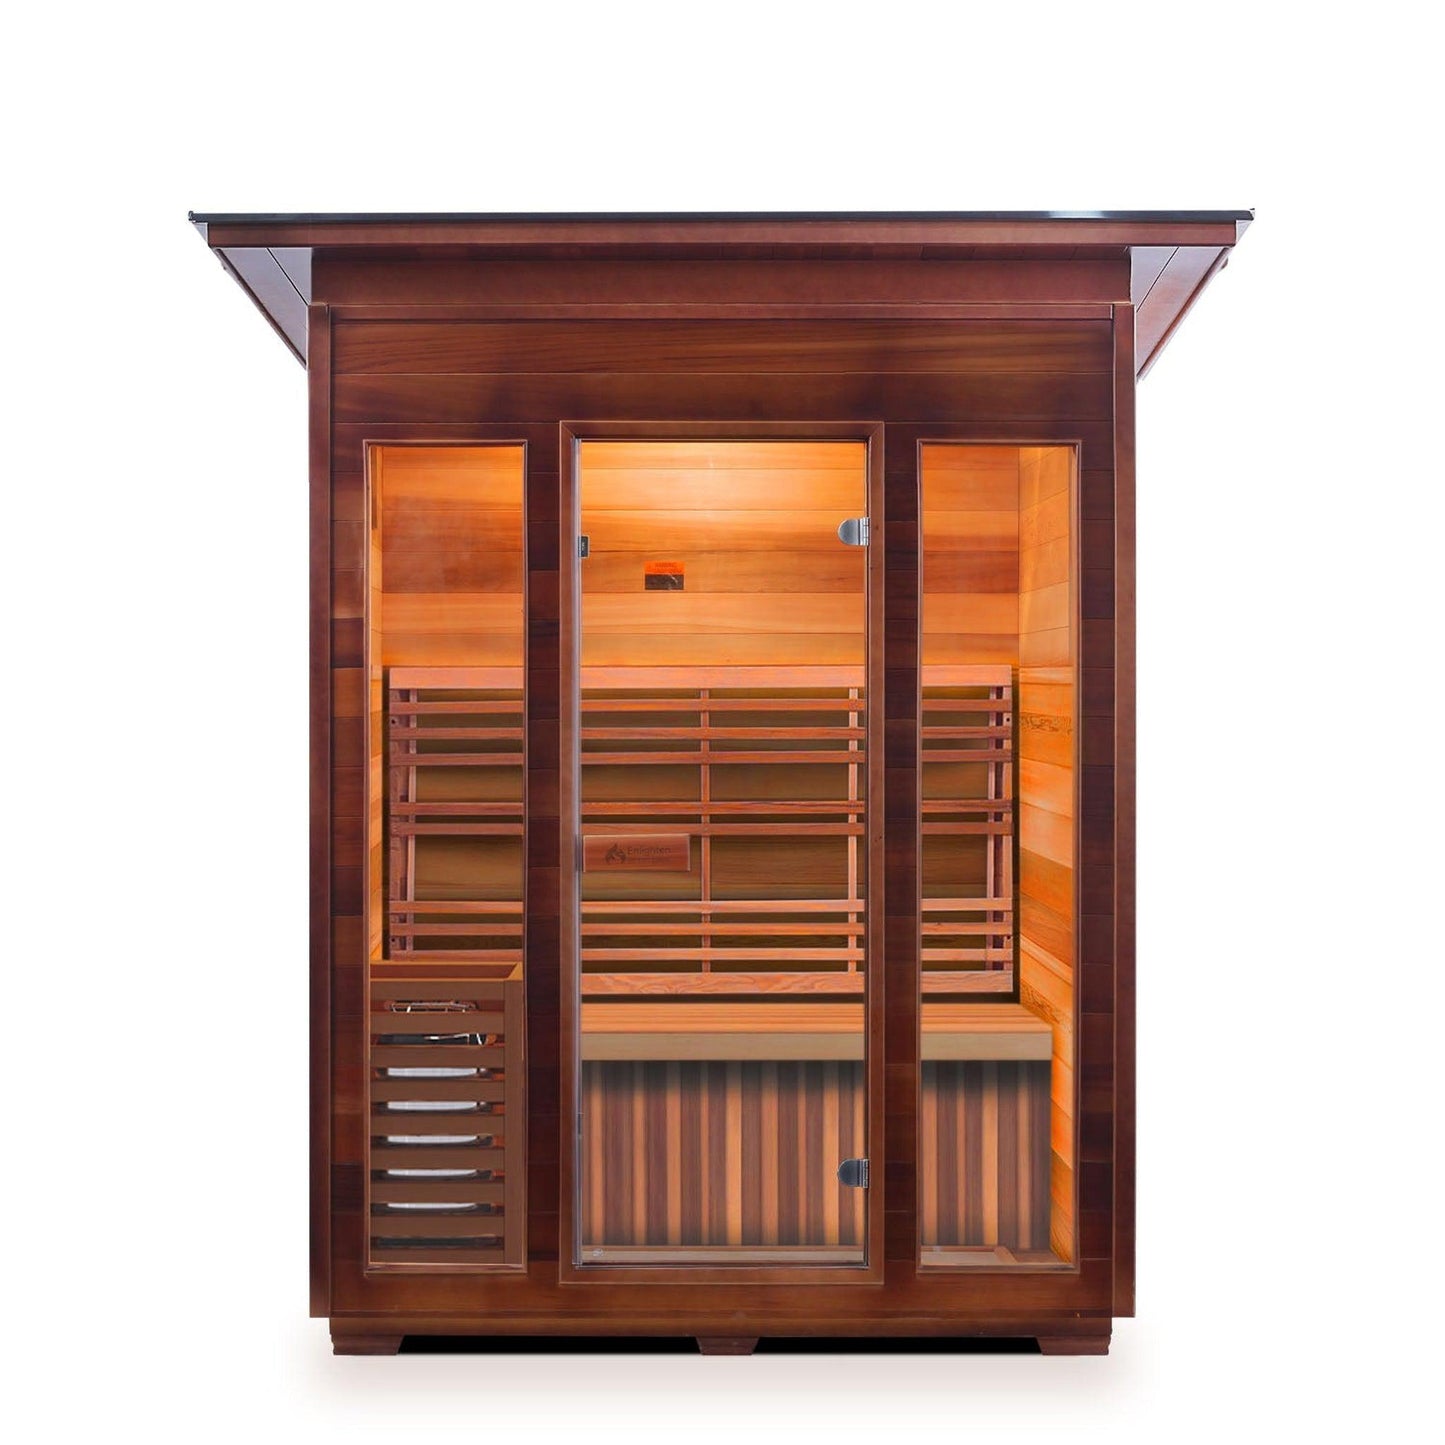 Enlighten SaunaTerra SunRise 3-Person Slope Roof Dry Traditional Outdoor Sauna